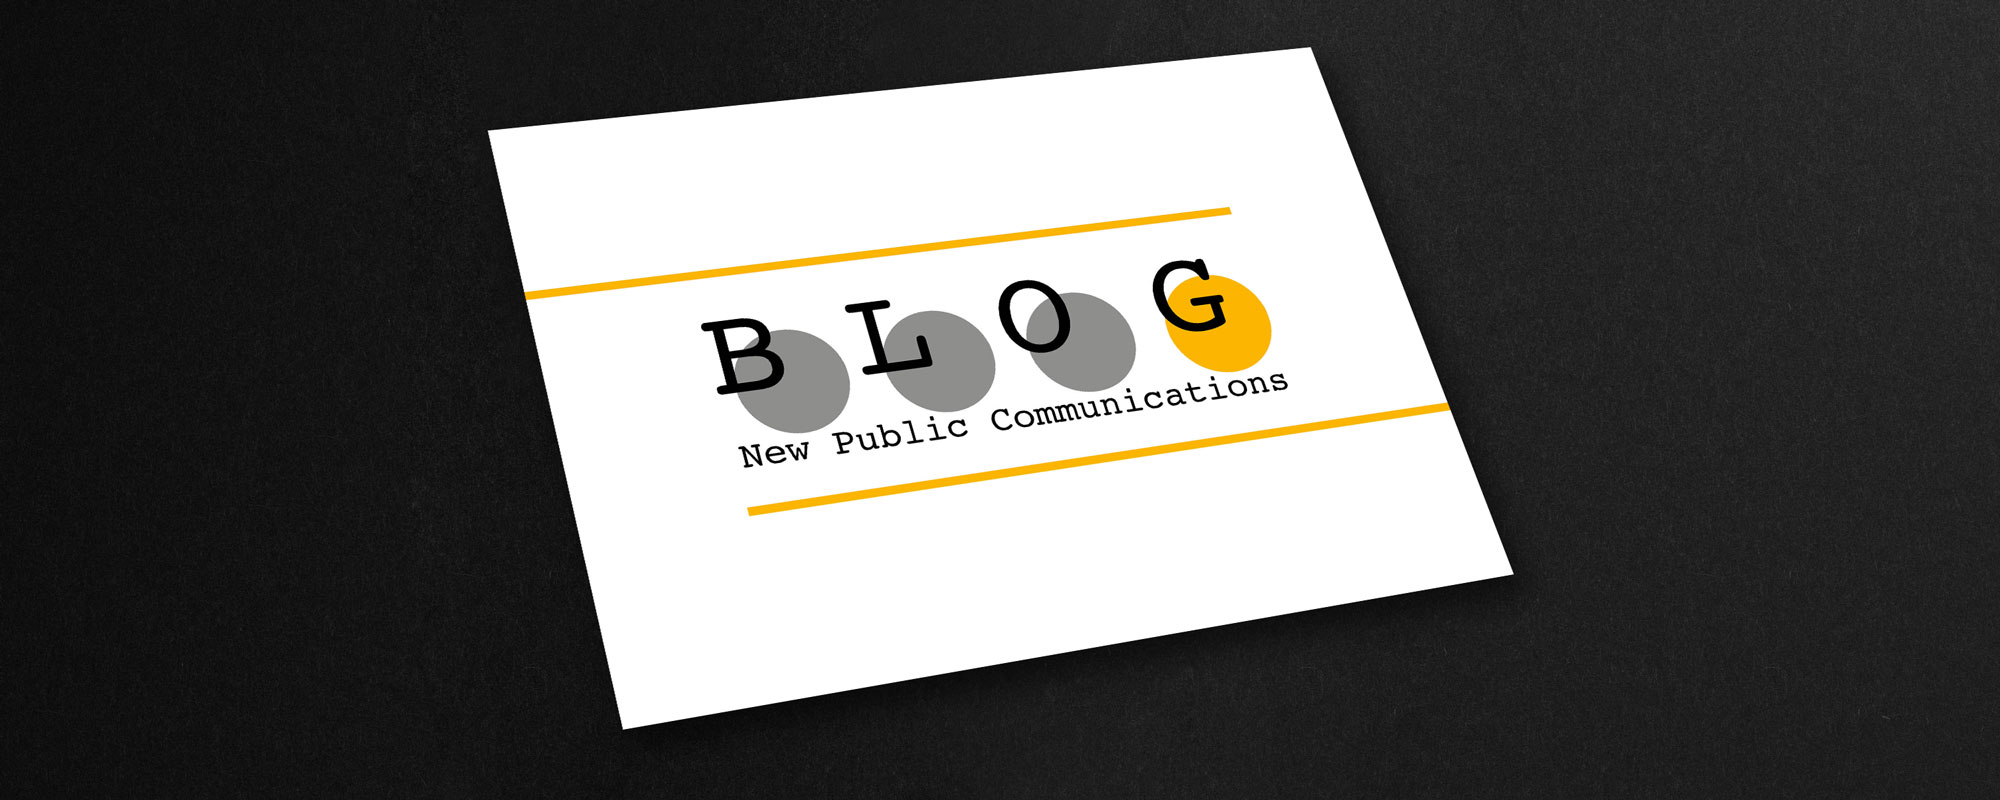 blog new public communiaction